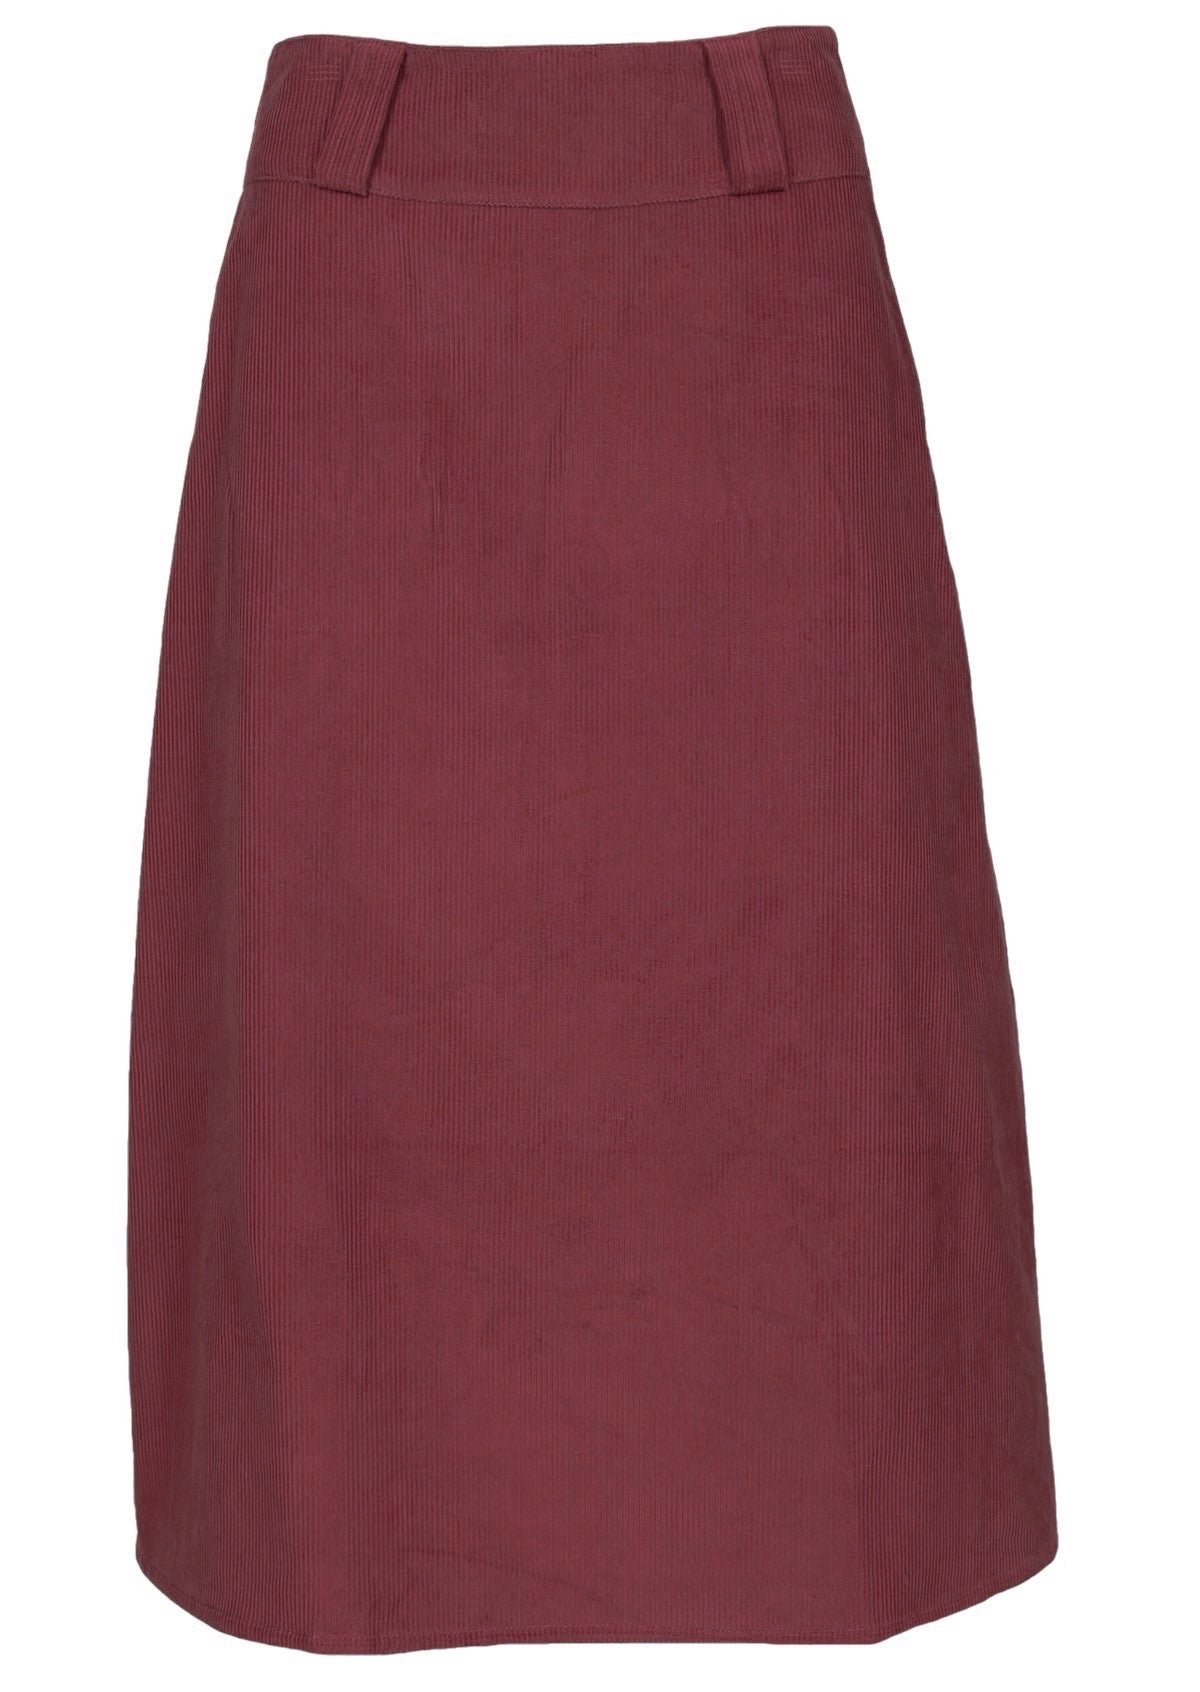 Zinfandel red 100% cotton corduroy skirt. 